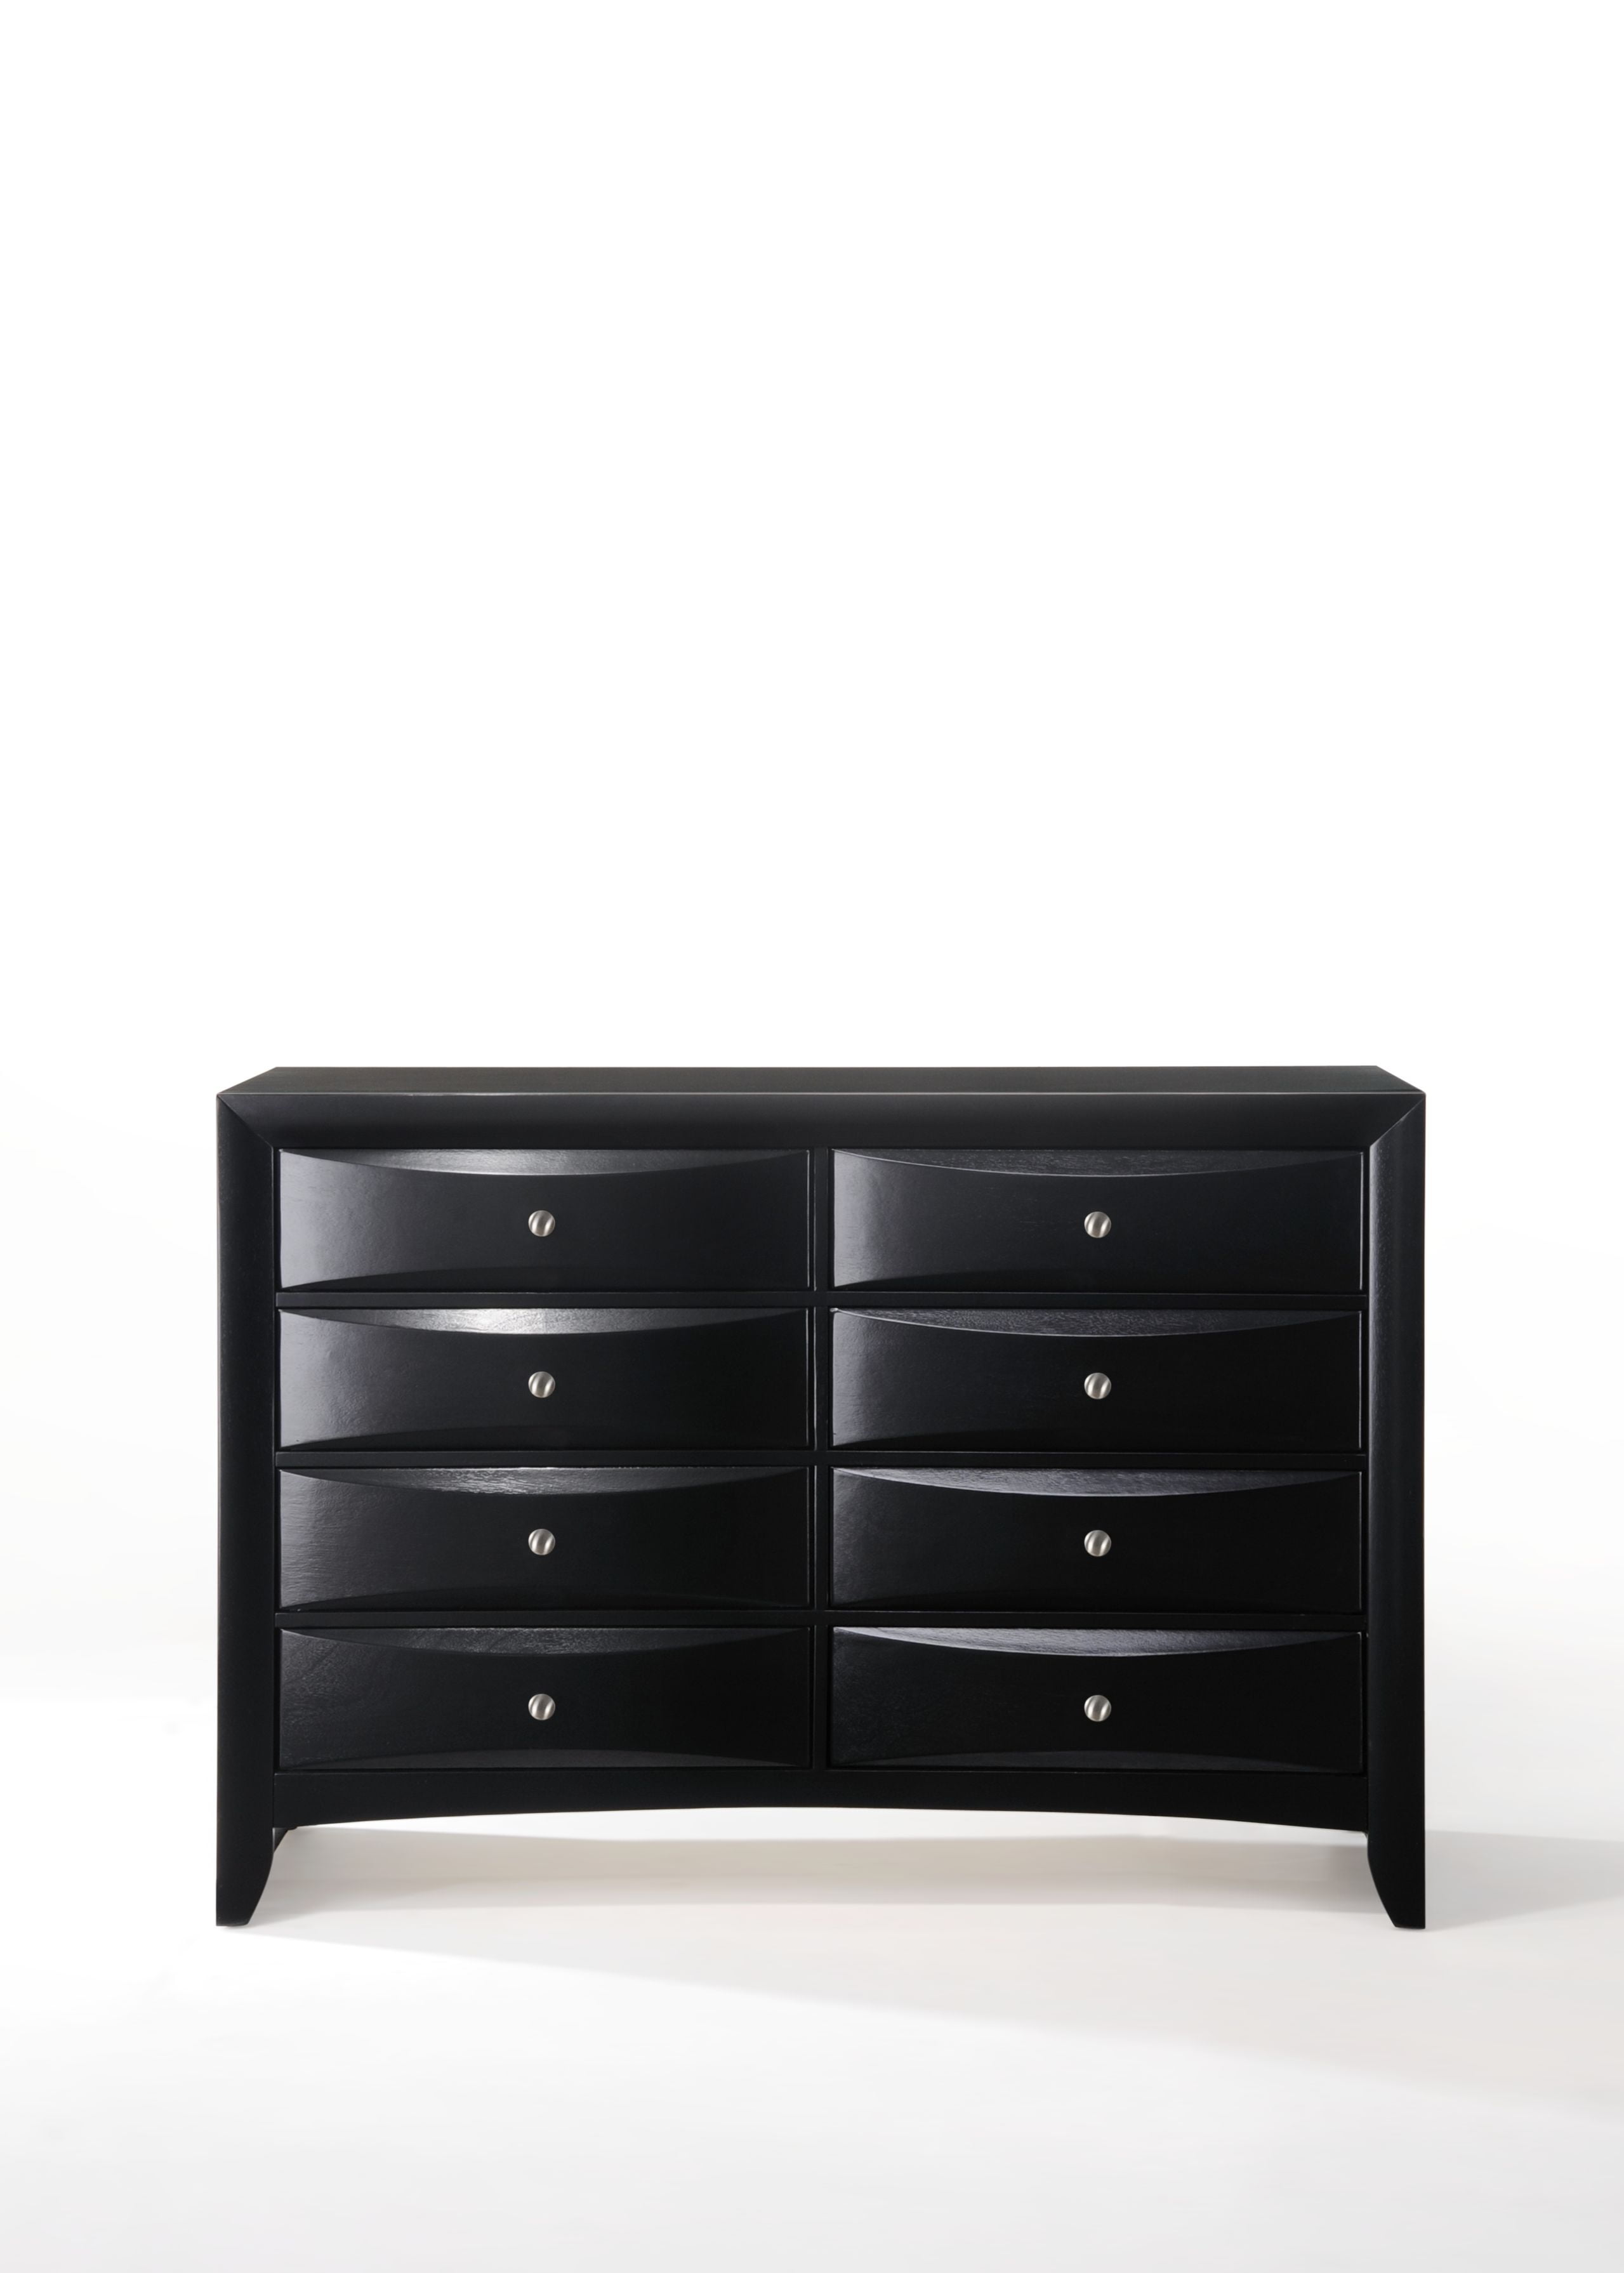 Acme Furniture Ireland Black Dresser With Eight Drawers Walmart